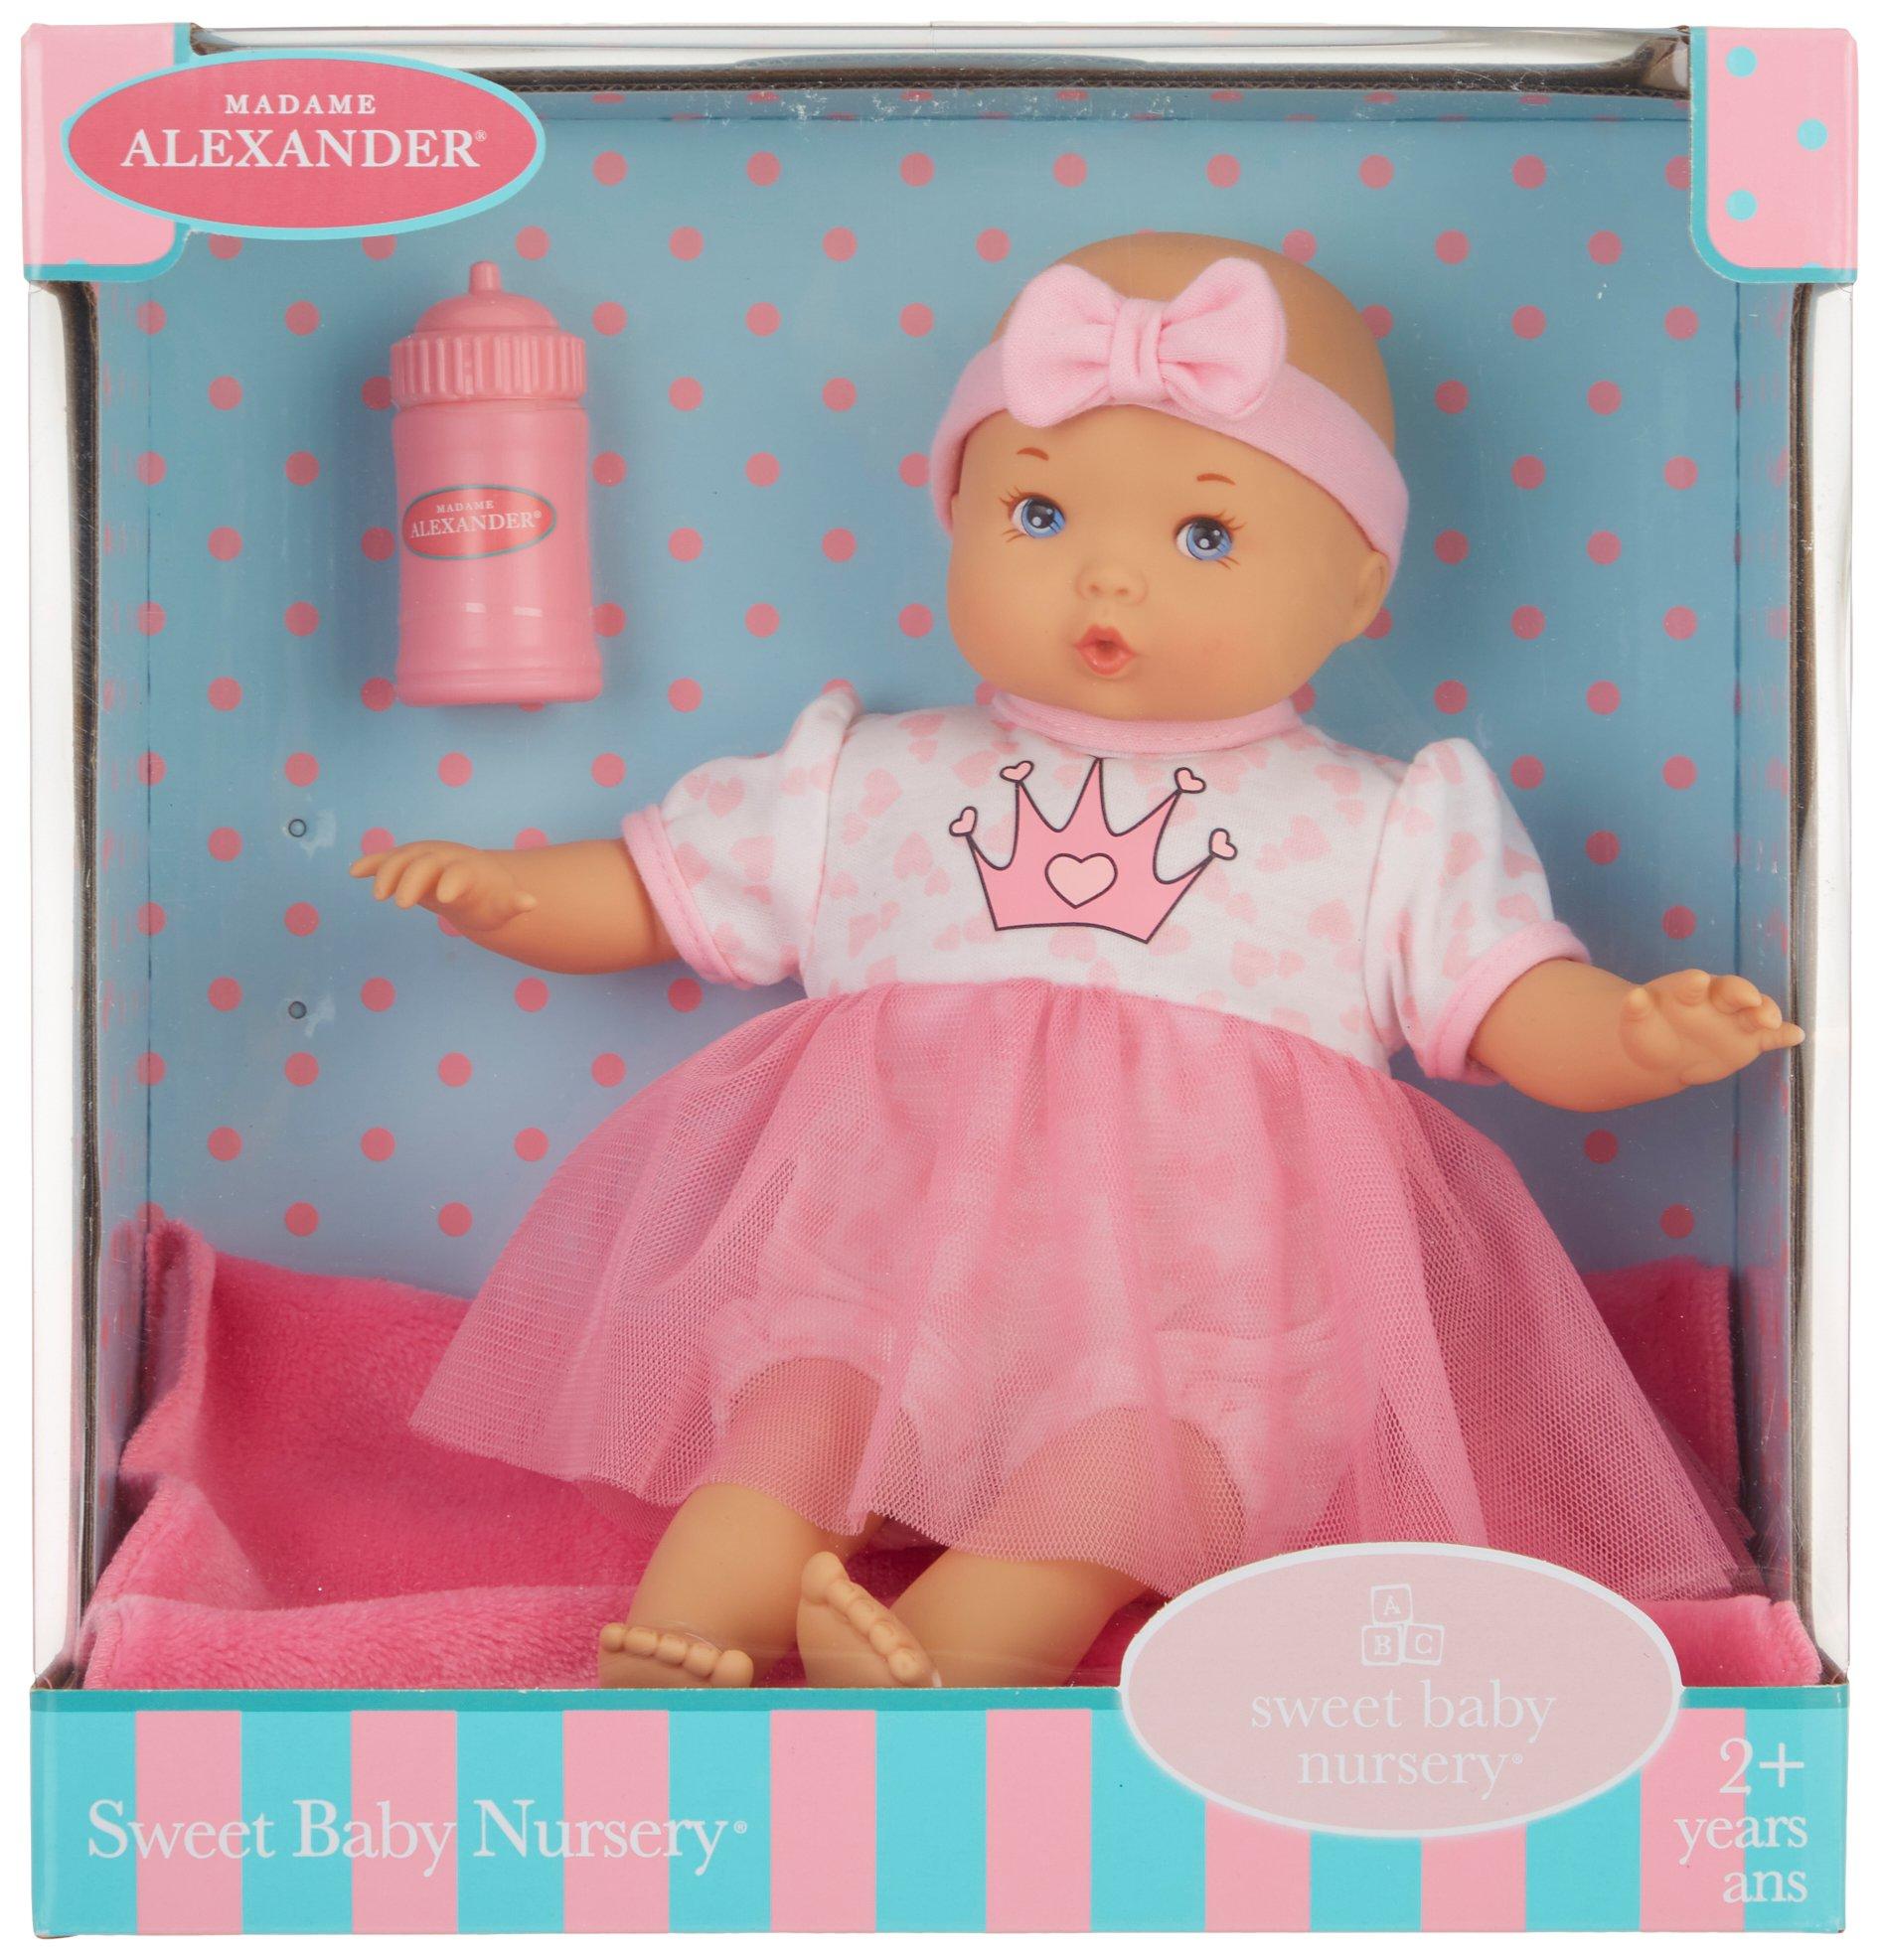 Madame Alexander Sweet Baby Nursery Outfit